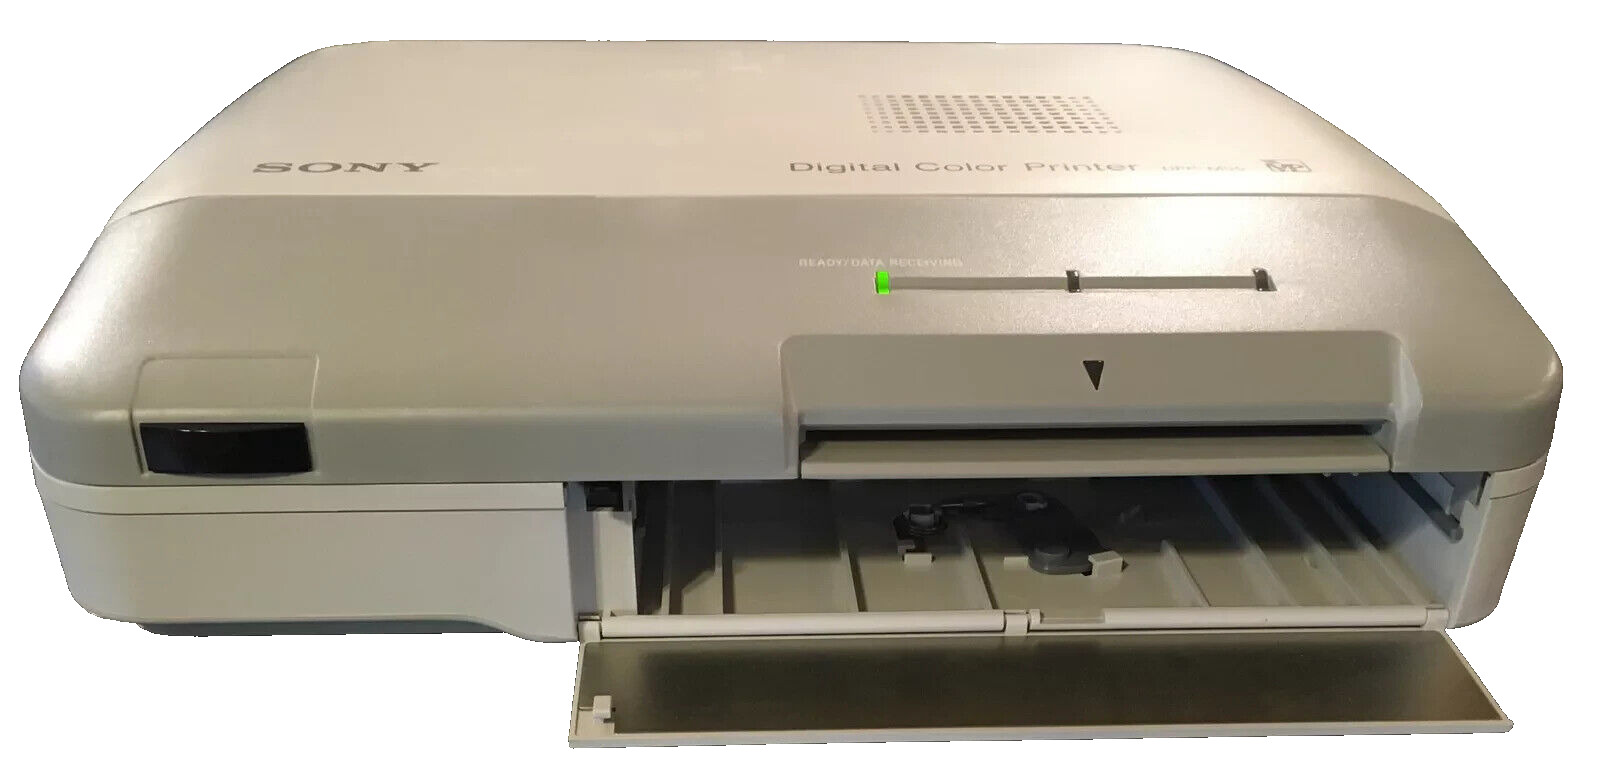 VINTAGE Sony DPP-M55 Digital Photo Thermal Printer Windows 95 Macintosh w/ Box